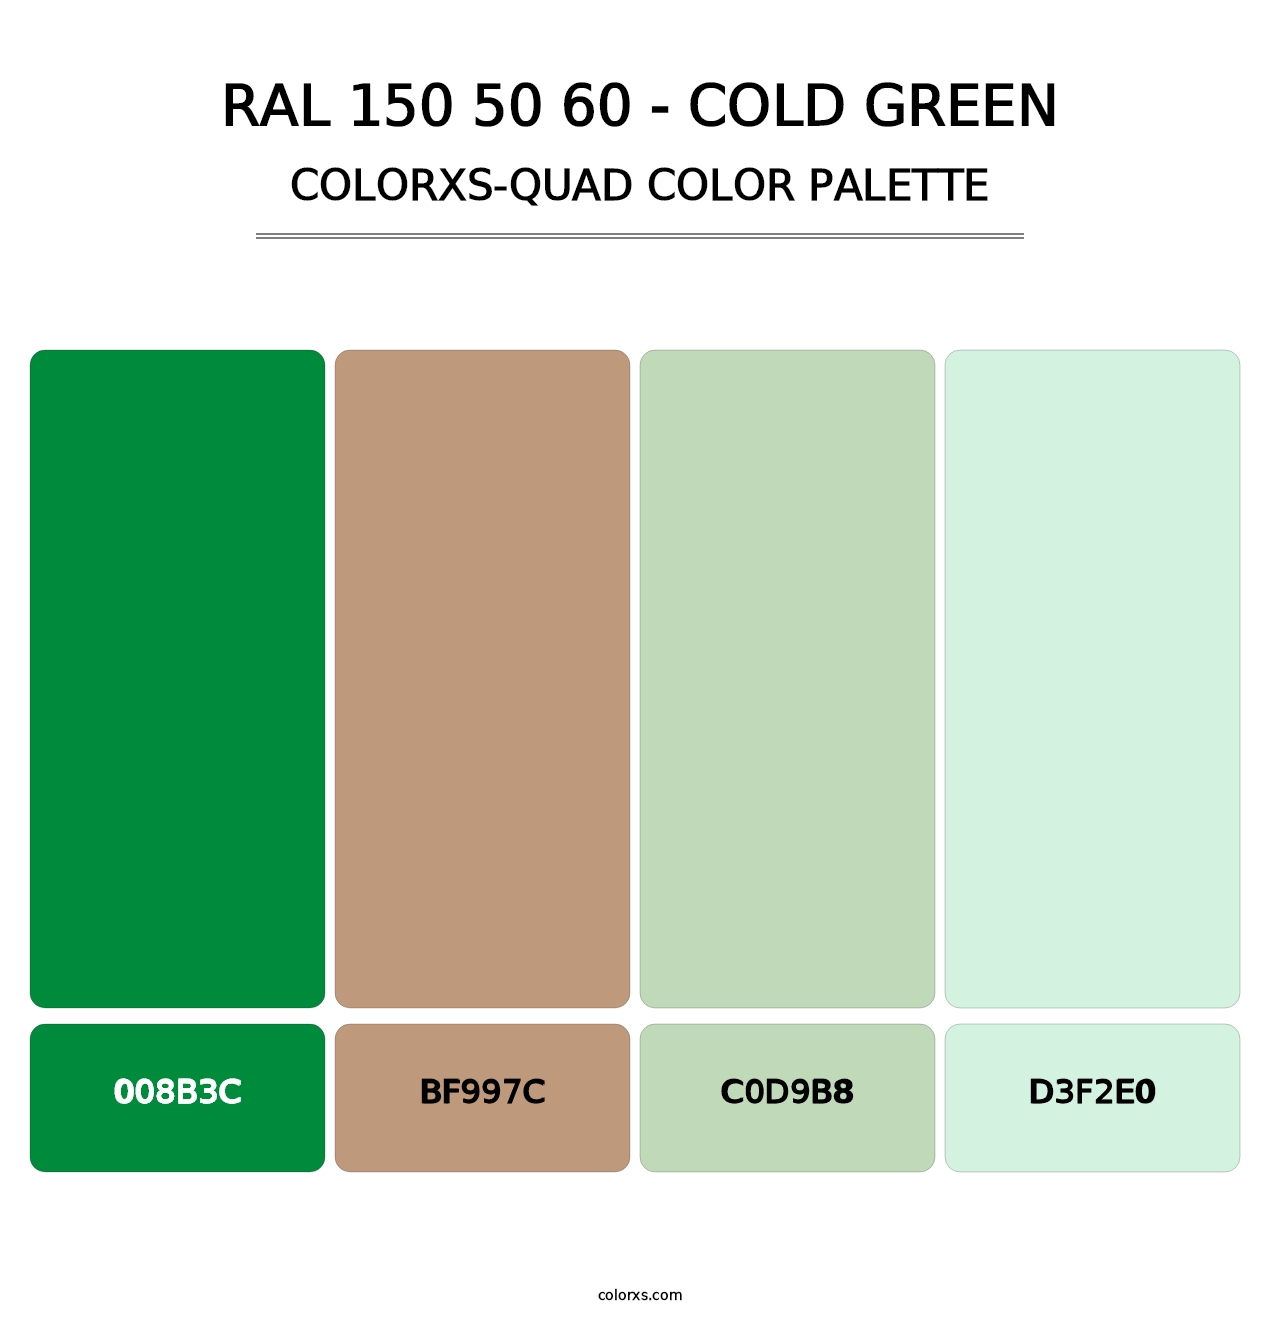 RAL 150 50 60 - Cold Green - Colorxs Quad Palette